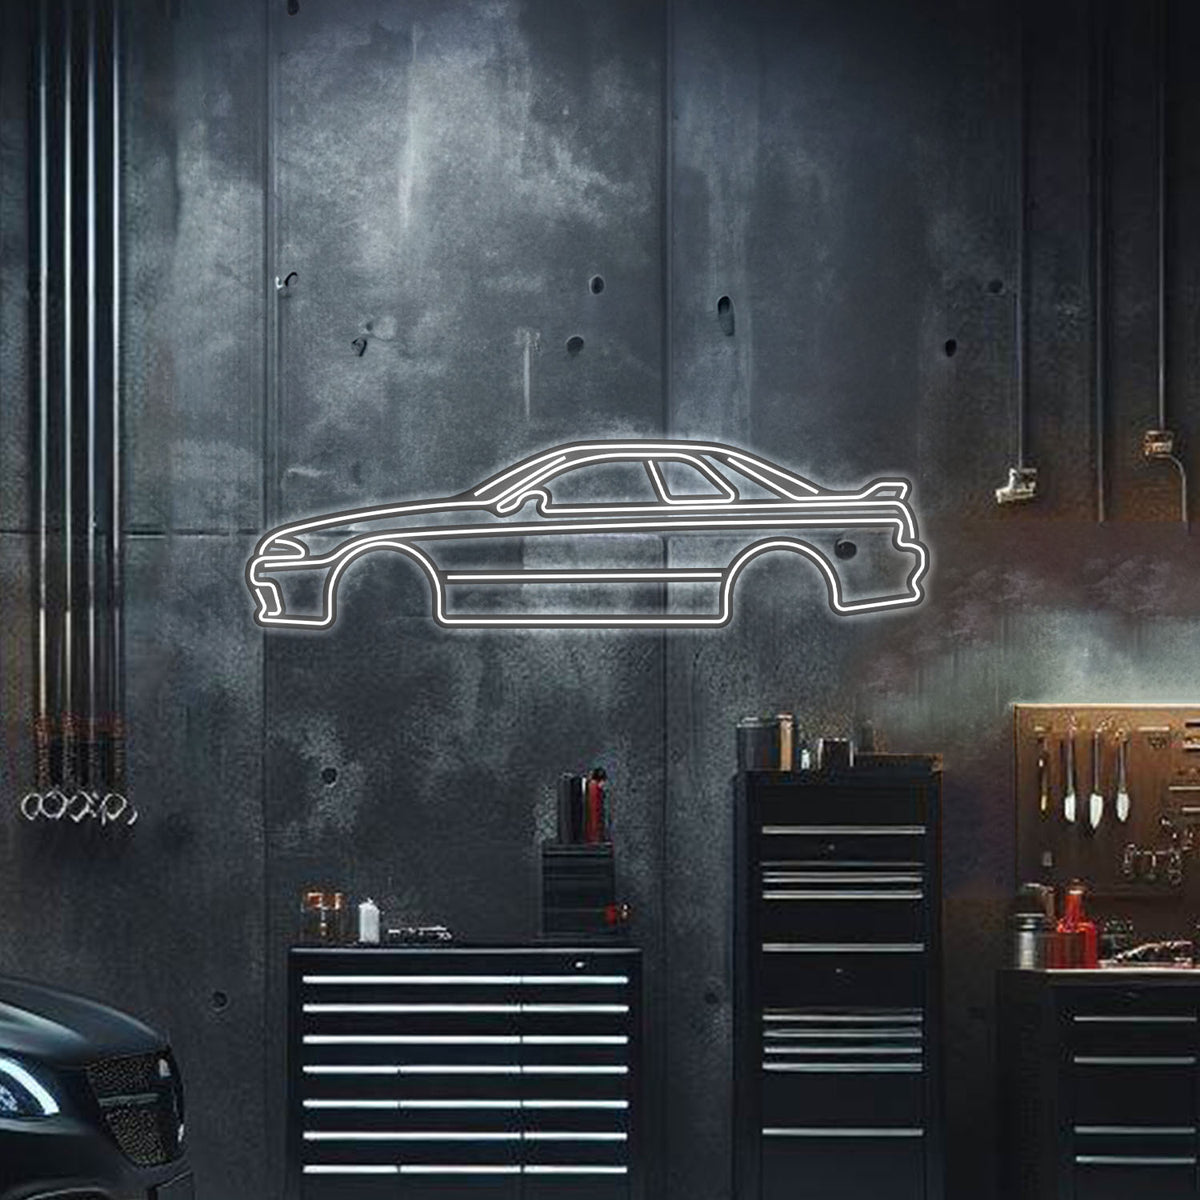 Skyline GTR R32 Metal Neon Car Wall Art - MTN0035